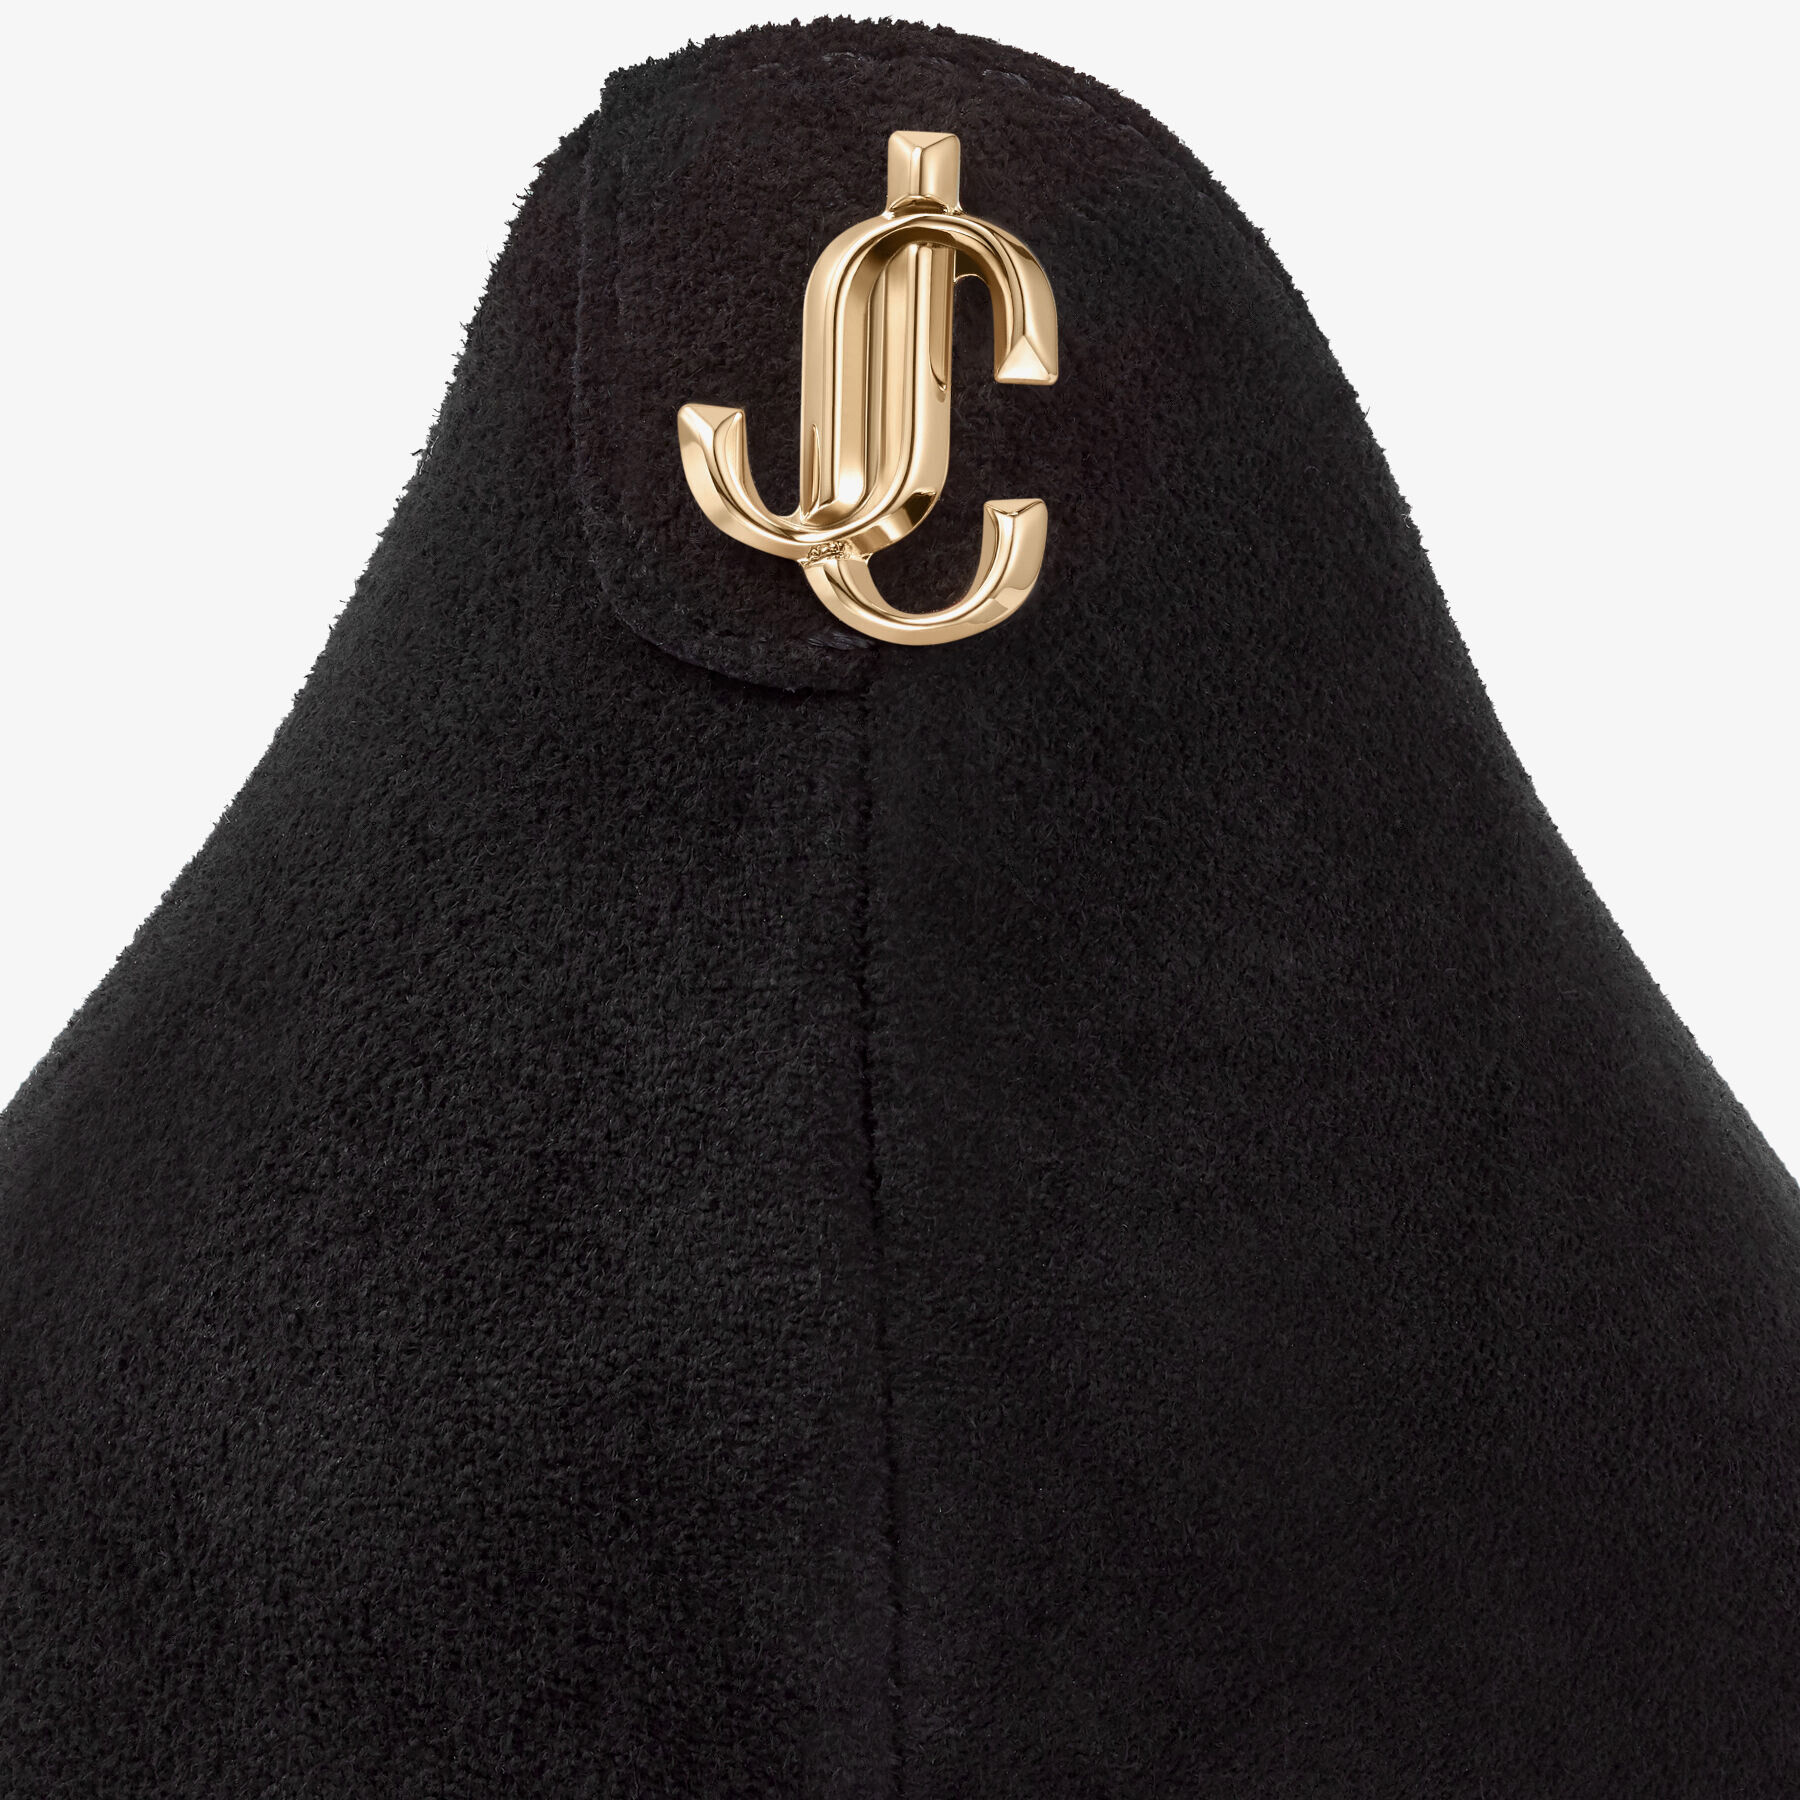 Black Suede Pointed Pumps with JC Emblem |LOVE 85 | Autumn Winter 